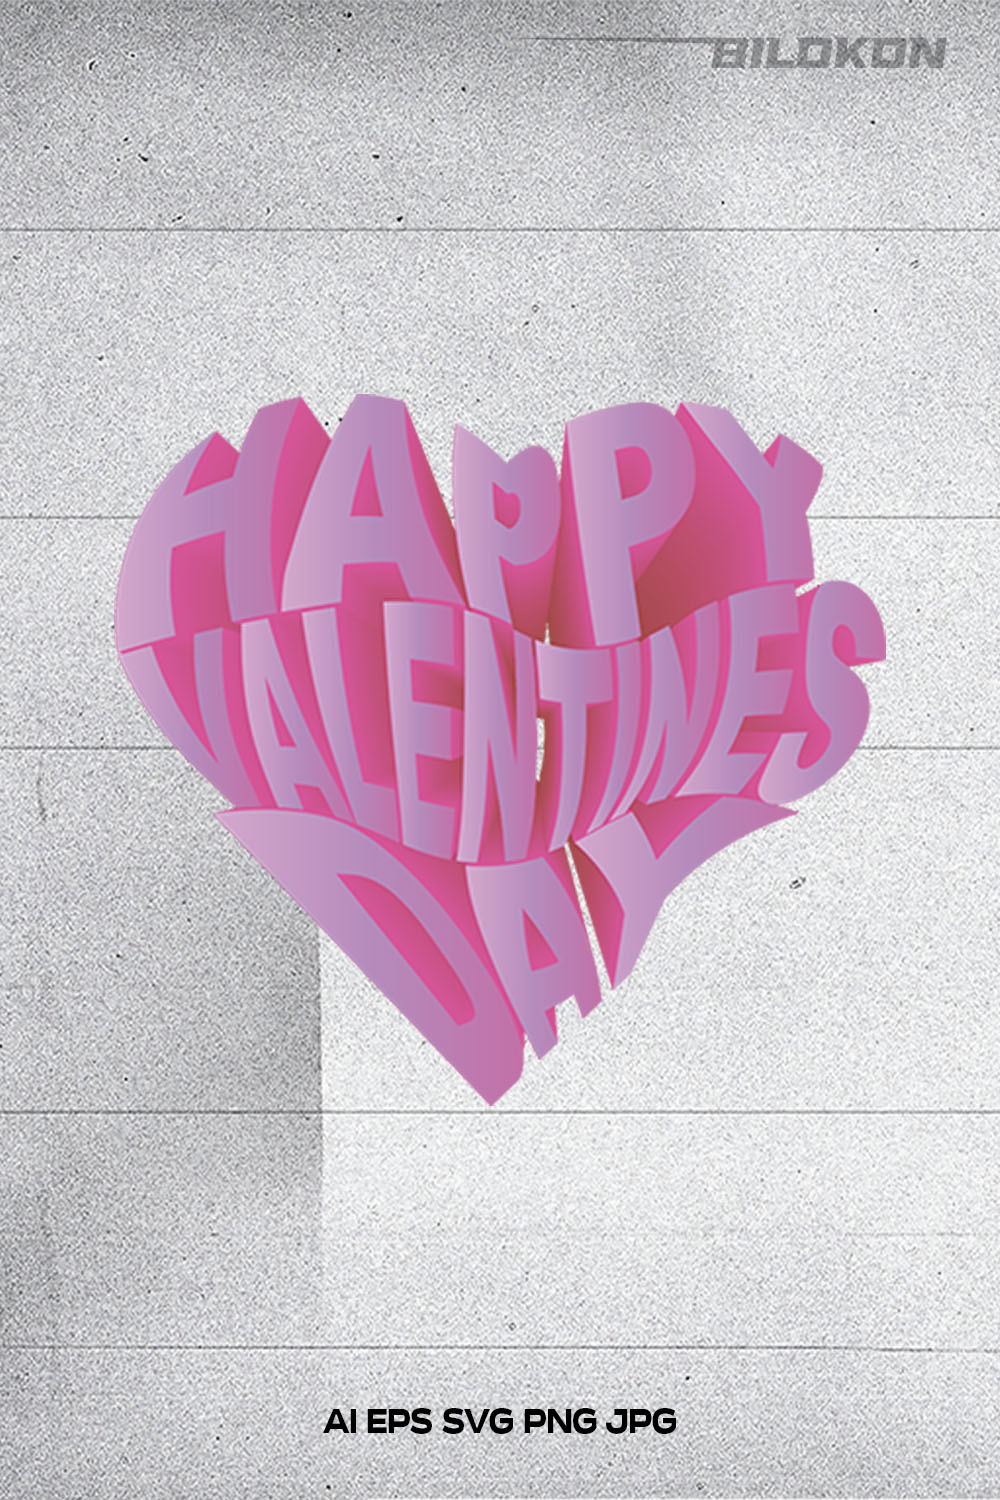 Happy Valentine's Day in Heart Shape 3D SVG Design pinterest image.